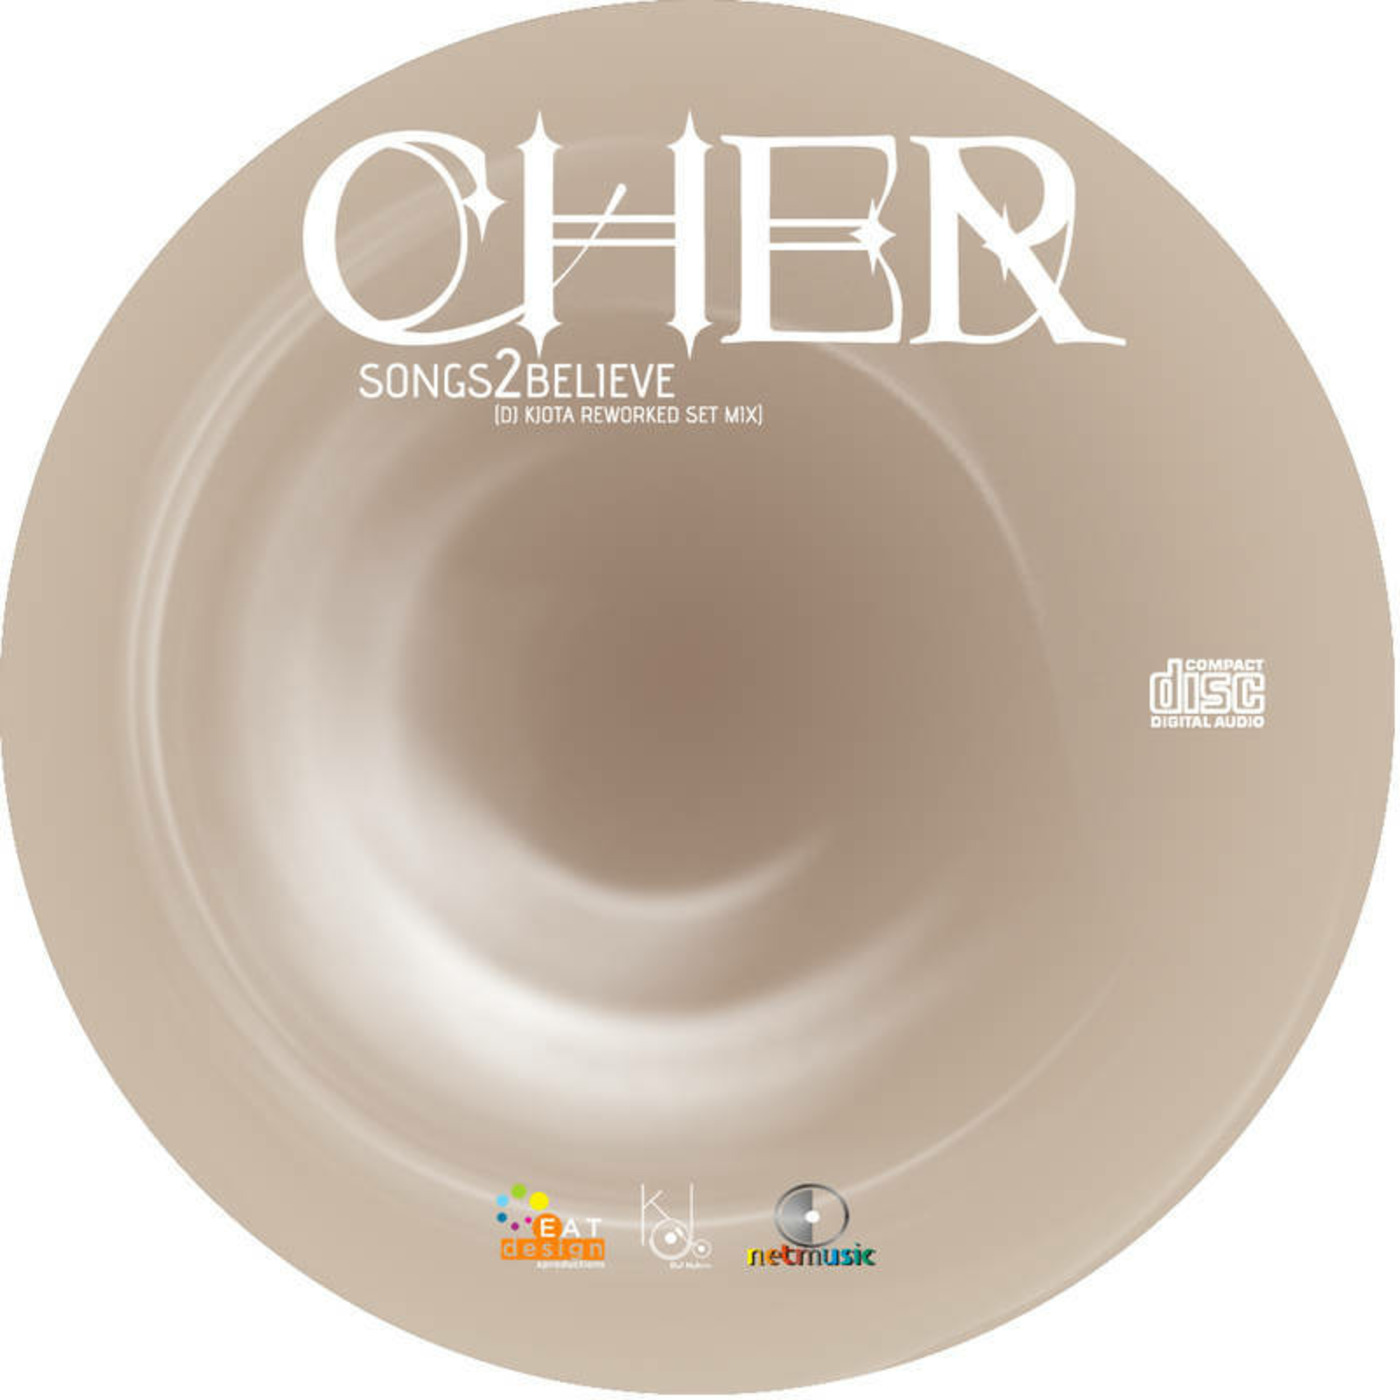 Cher - Songs2Believe (DJ KJota Reworked Set mix)